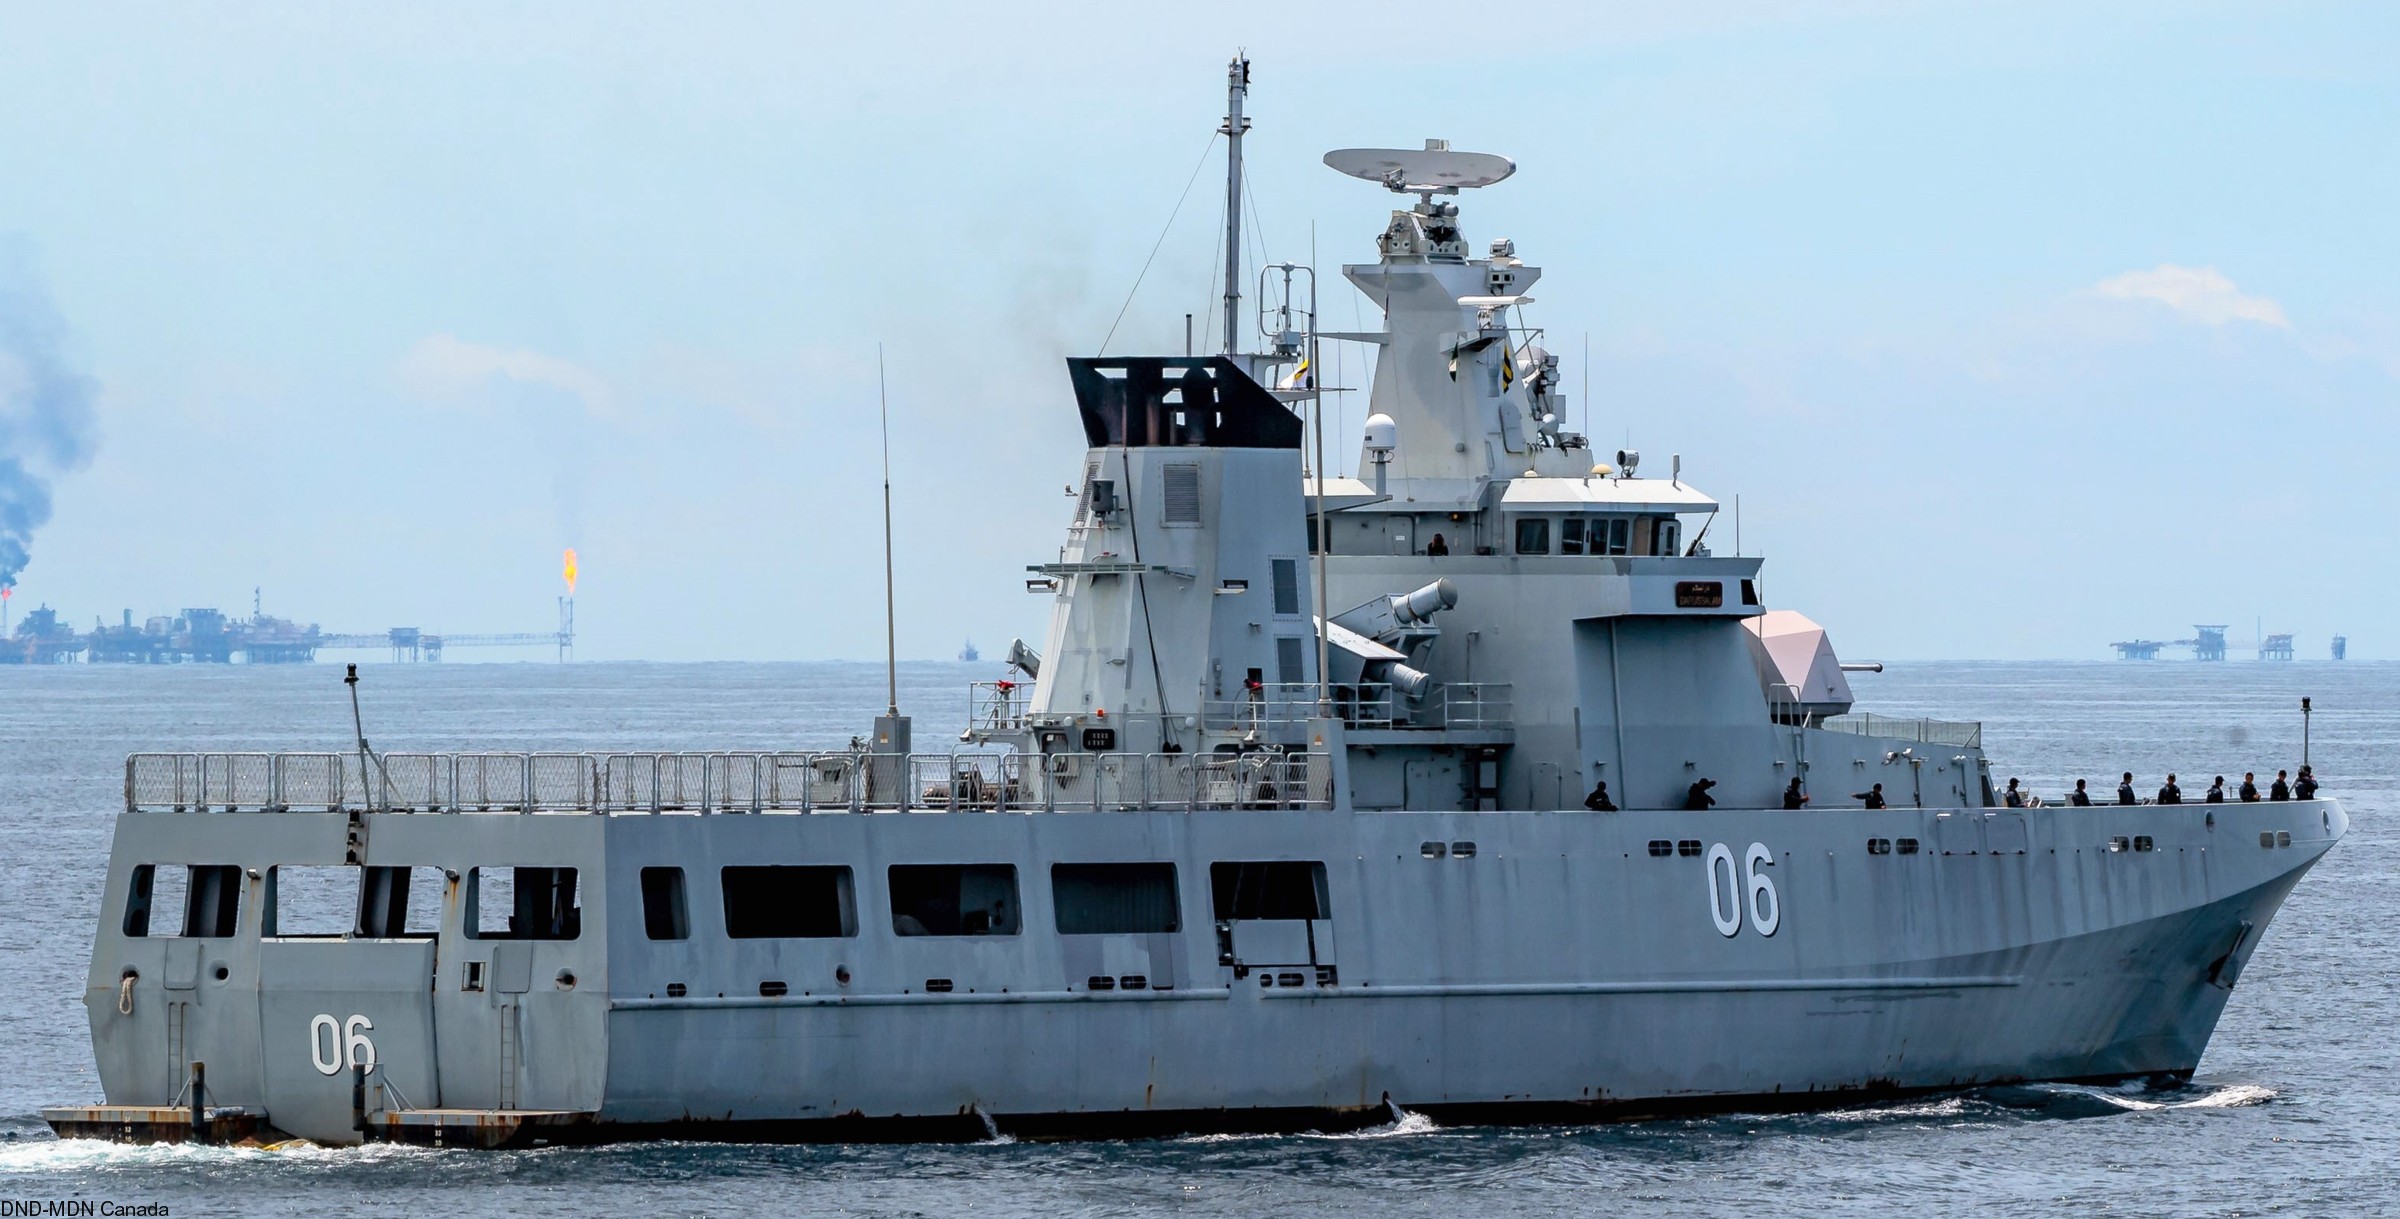 opv 06 kdb darussalam offshore patrol vessel royal brunei navy 05